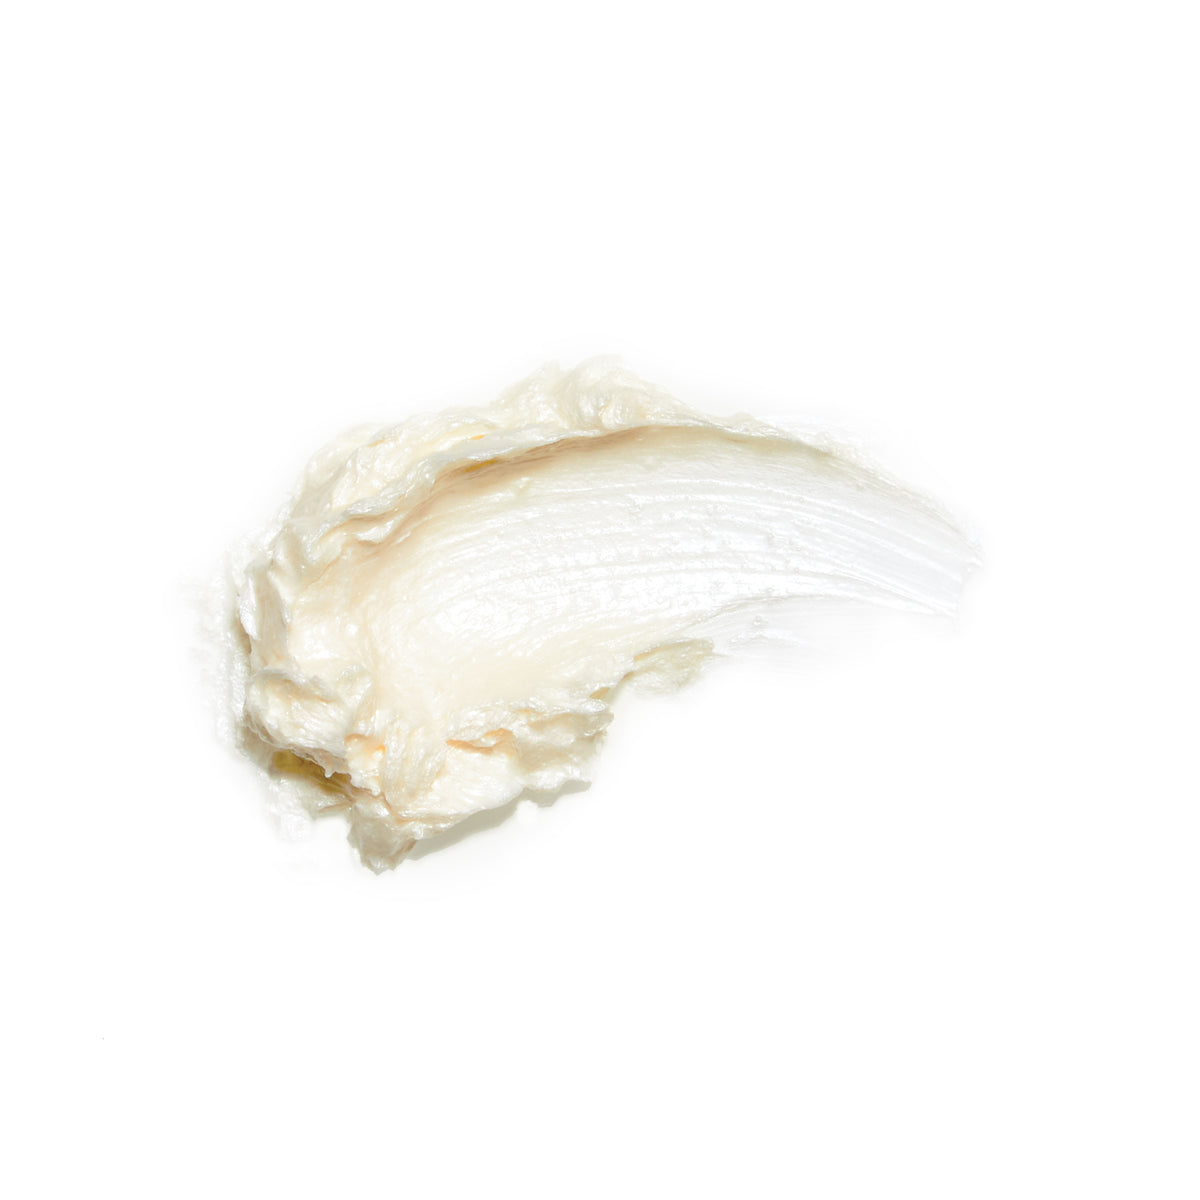 Caswell Massey - Woodgrain Sandalwood - Shaving Cream - 8oz